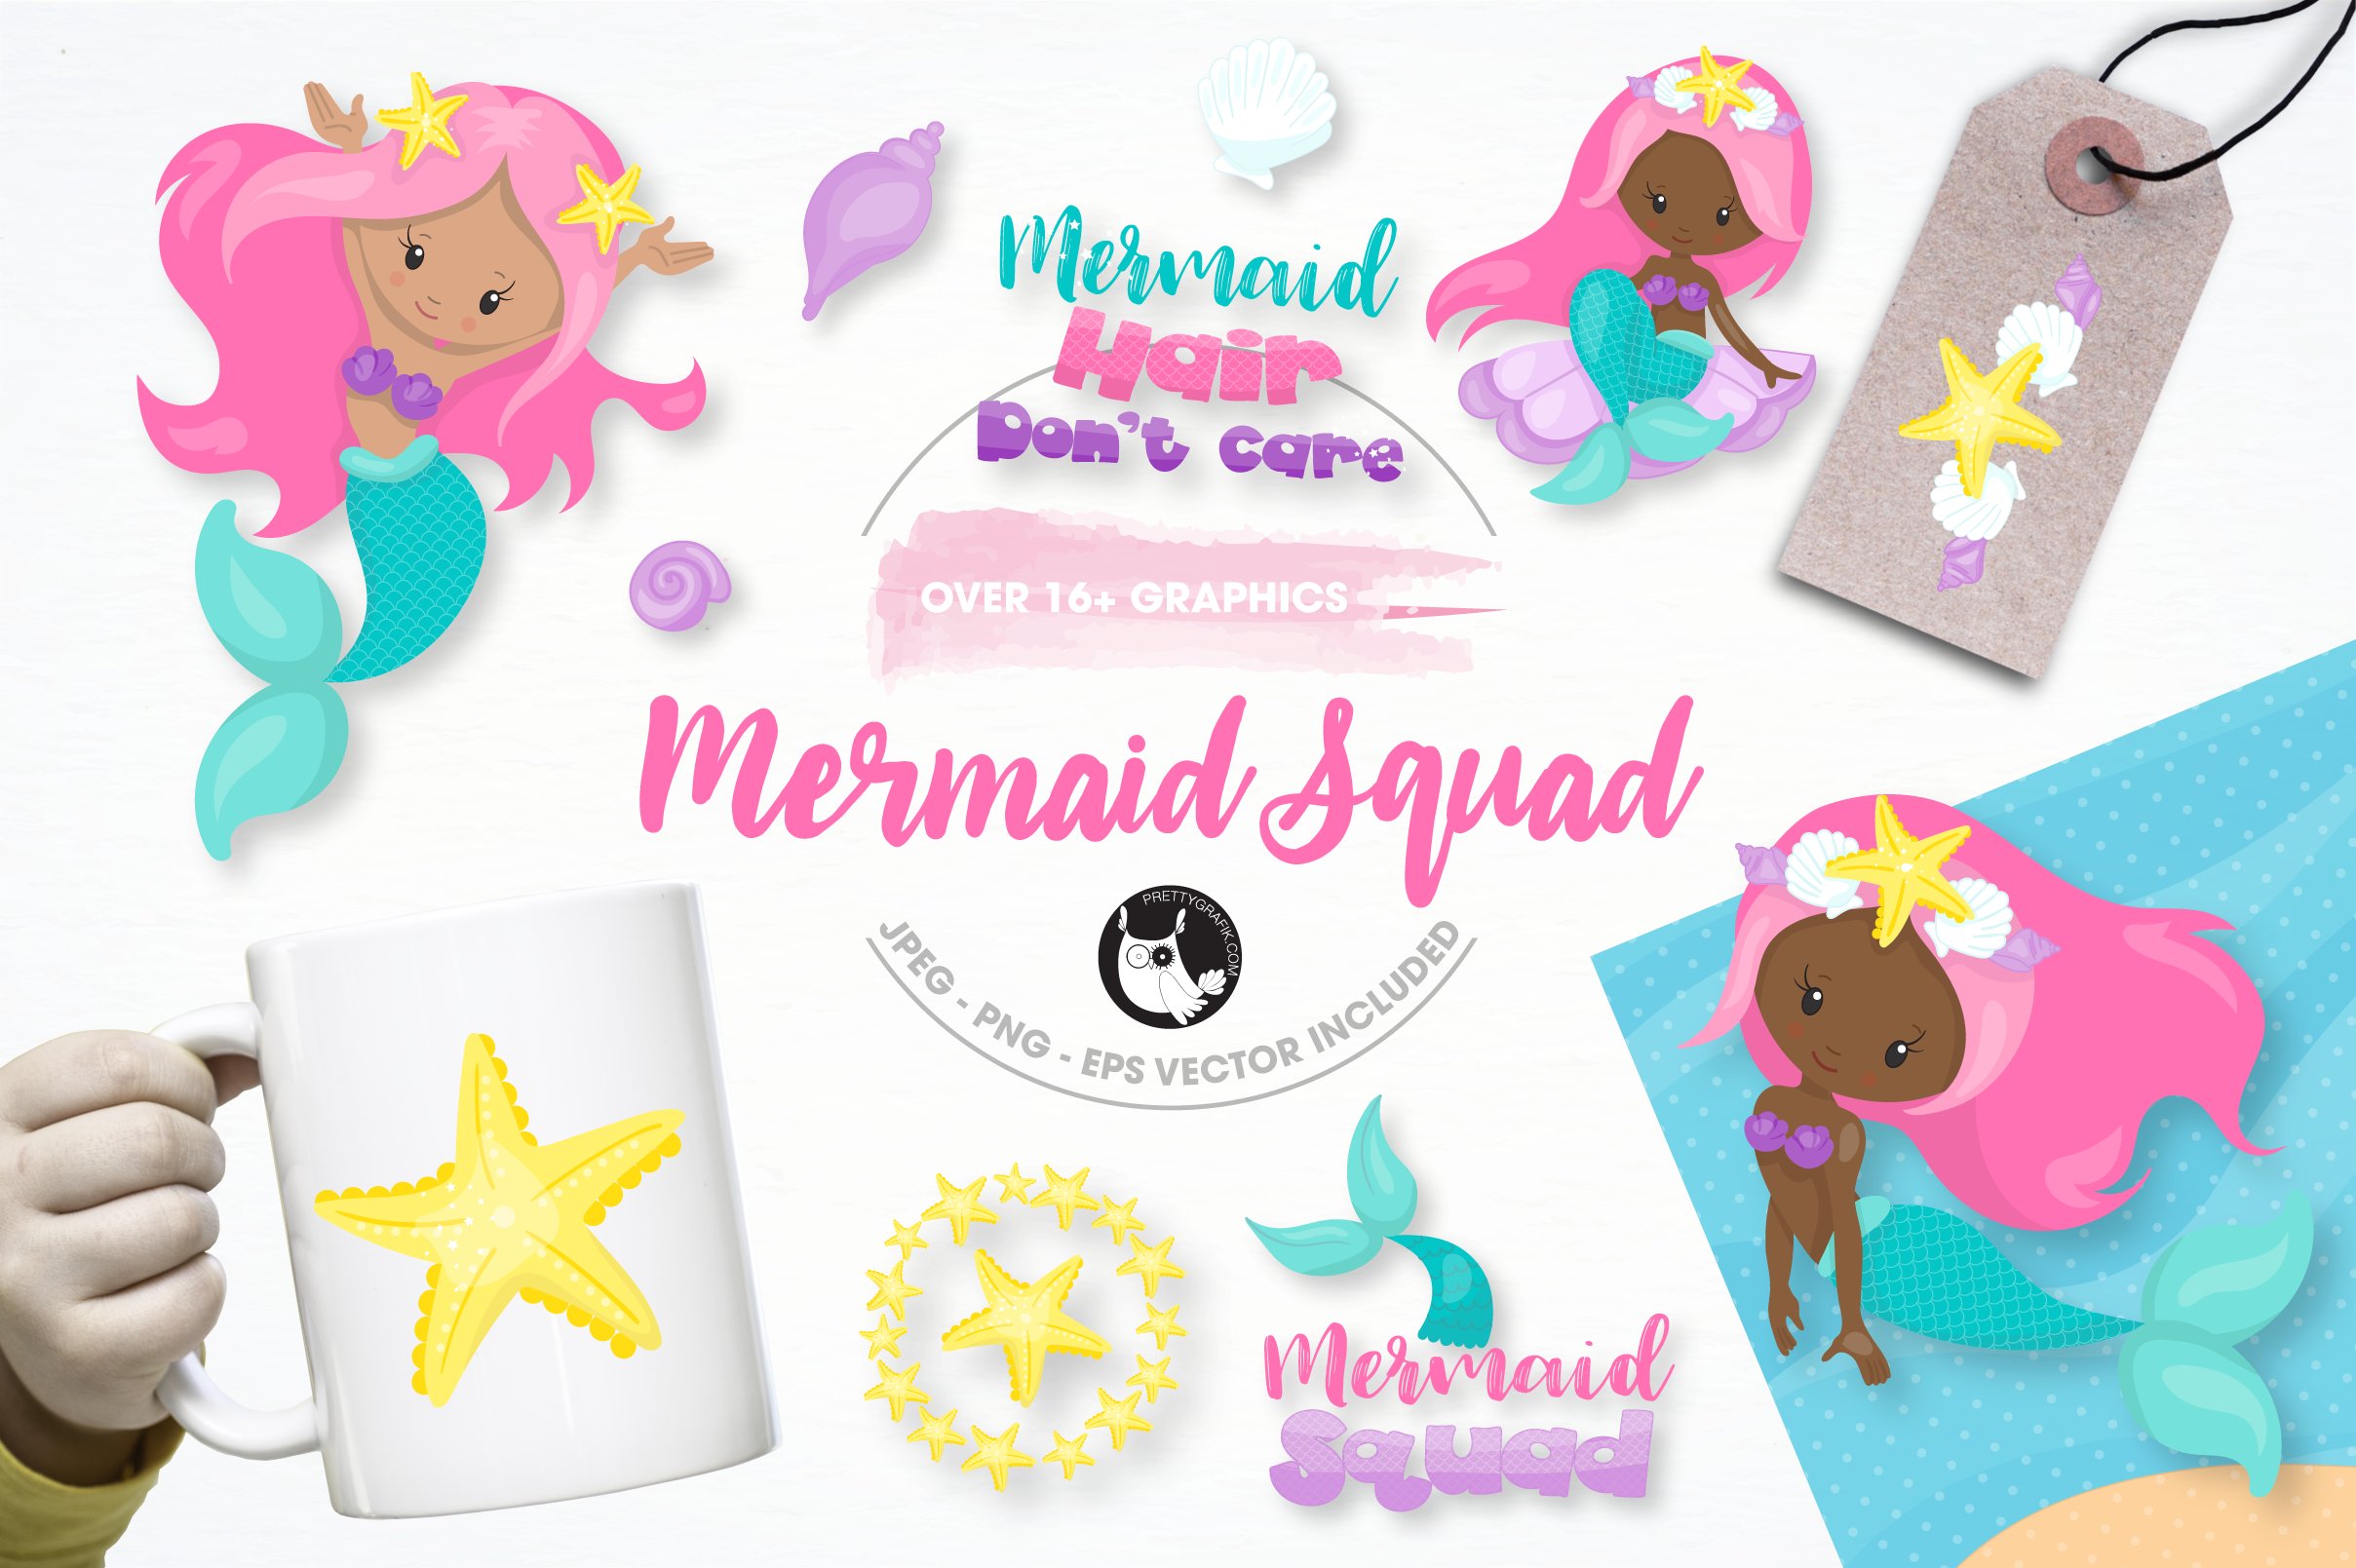 Mermaid squad illustration pack - Vector Image